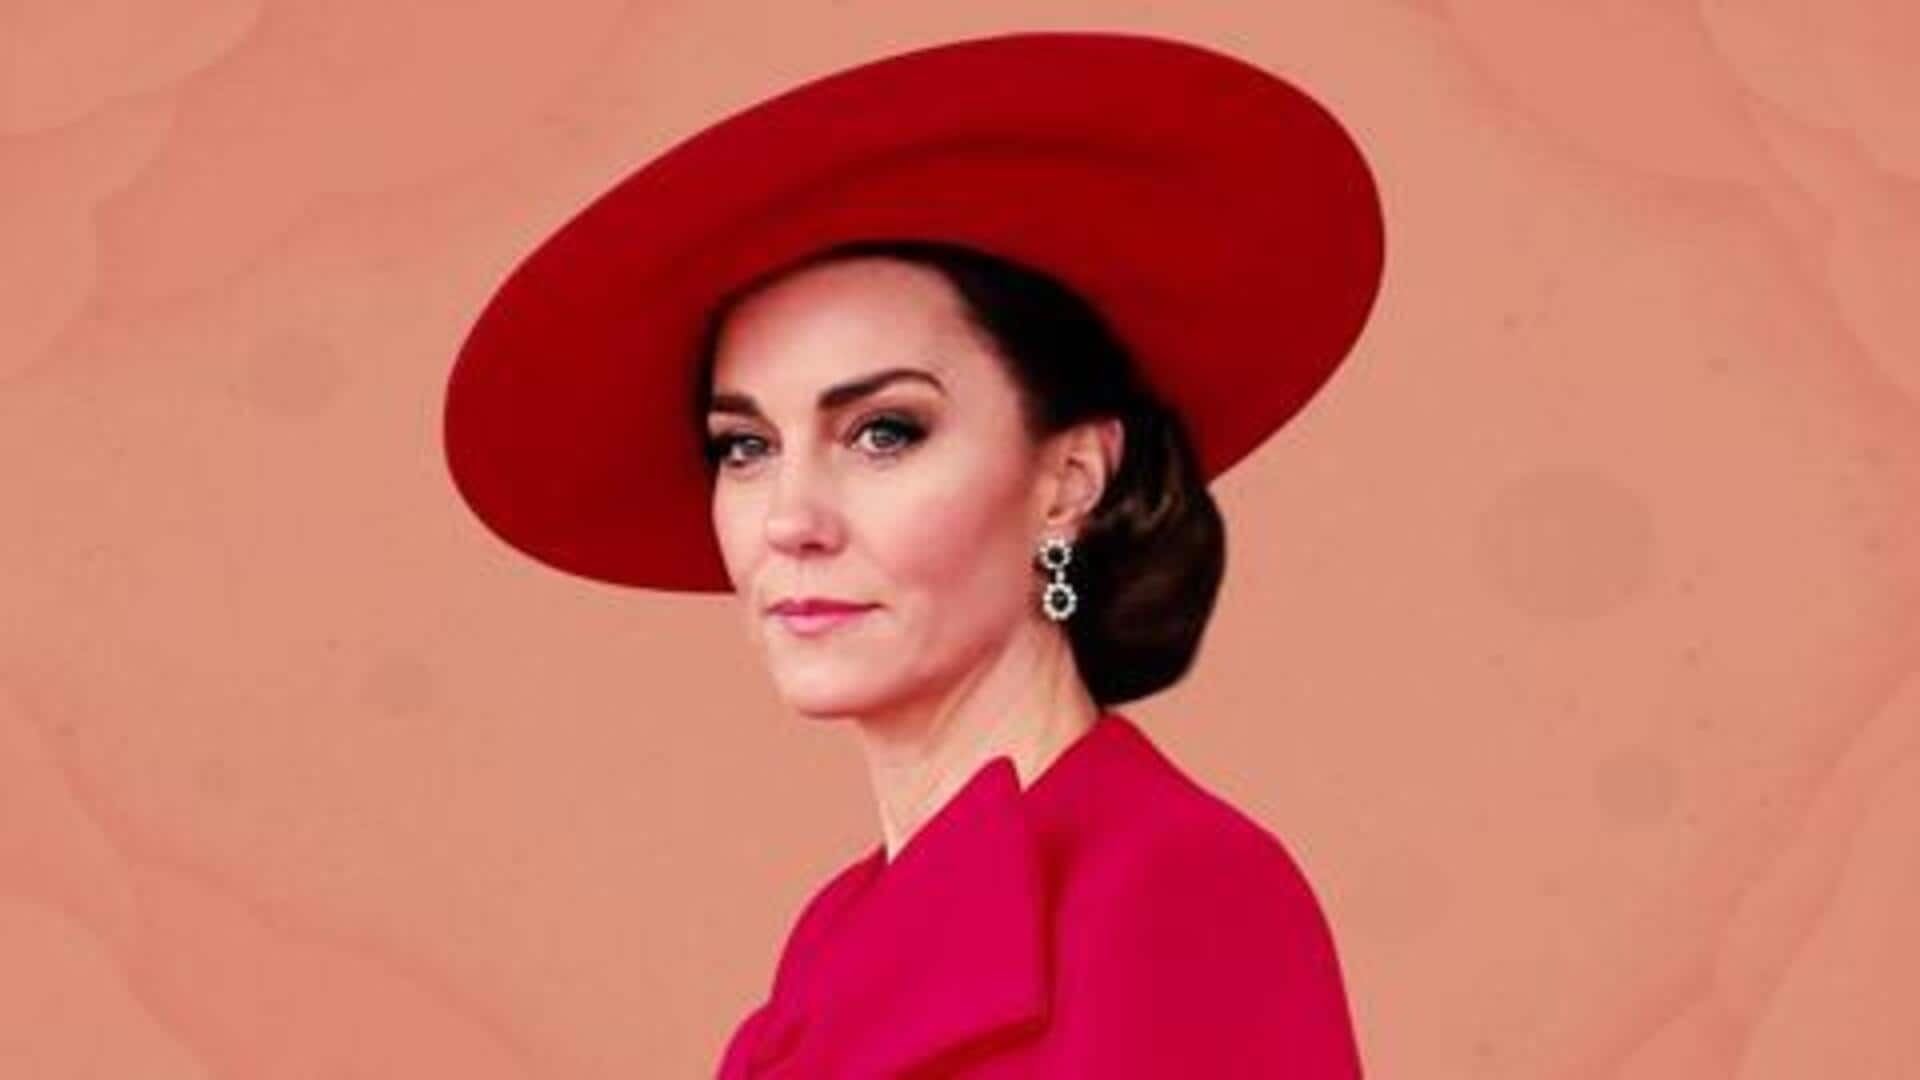 BBC addresses criticism over Kate Middleton's cancer coverage